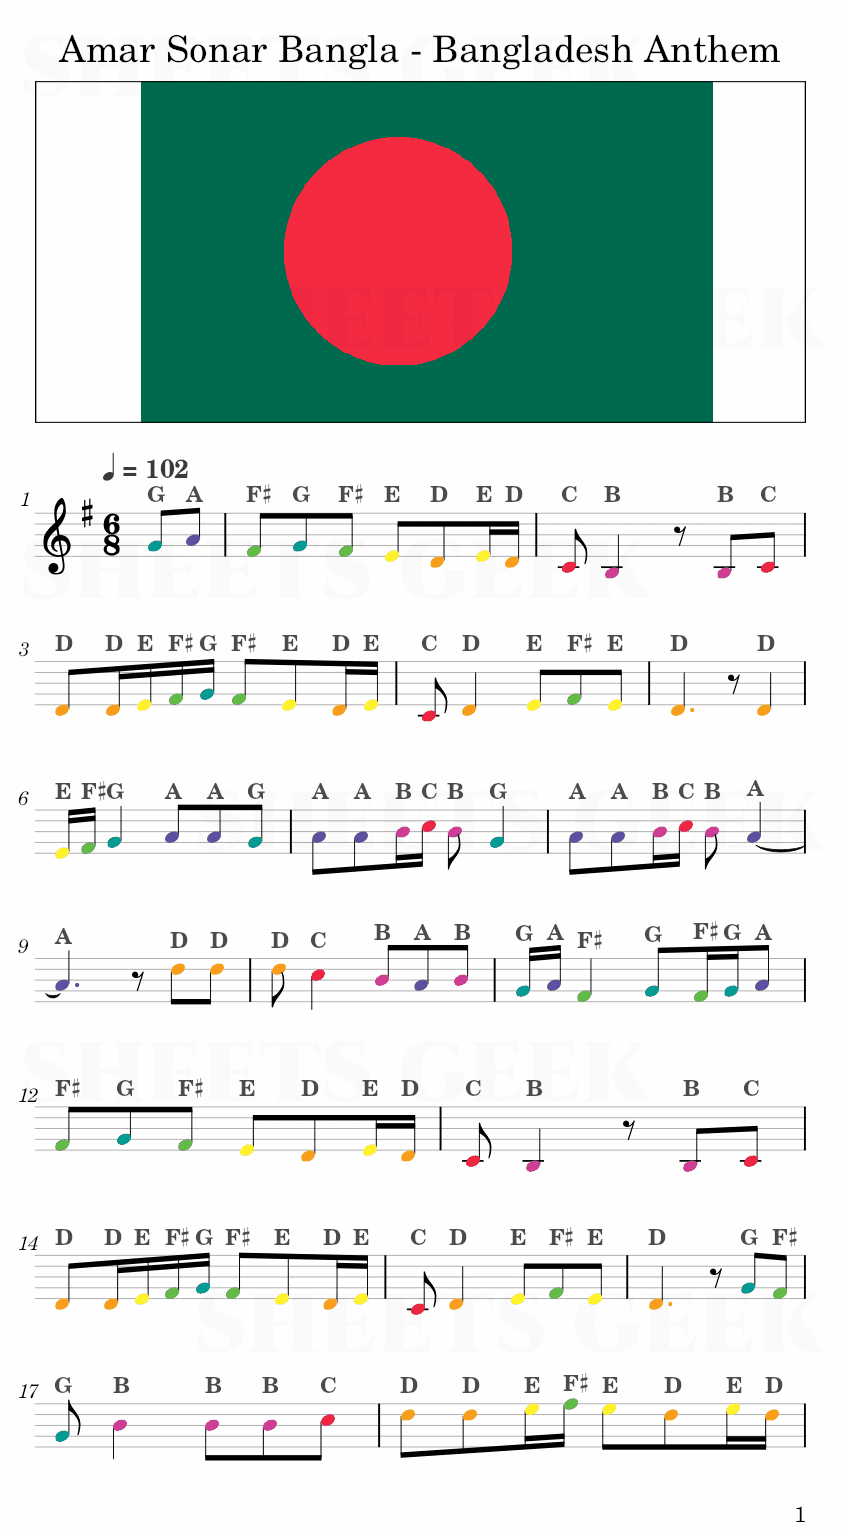 Amar Sonar Bangla - Bangladesh National Anthem Easy Sheet Music Free for piano, keyboard, flute, violin, sax, cello page 1